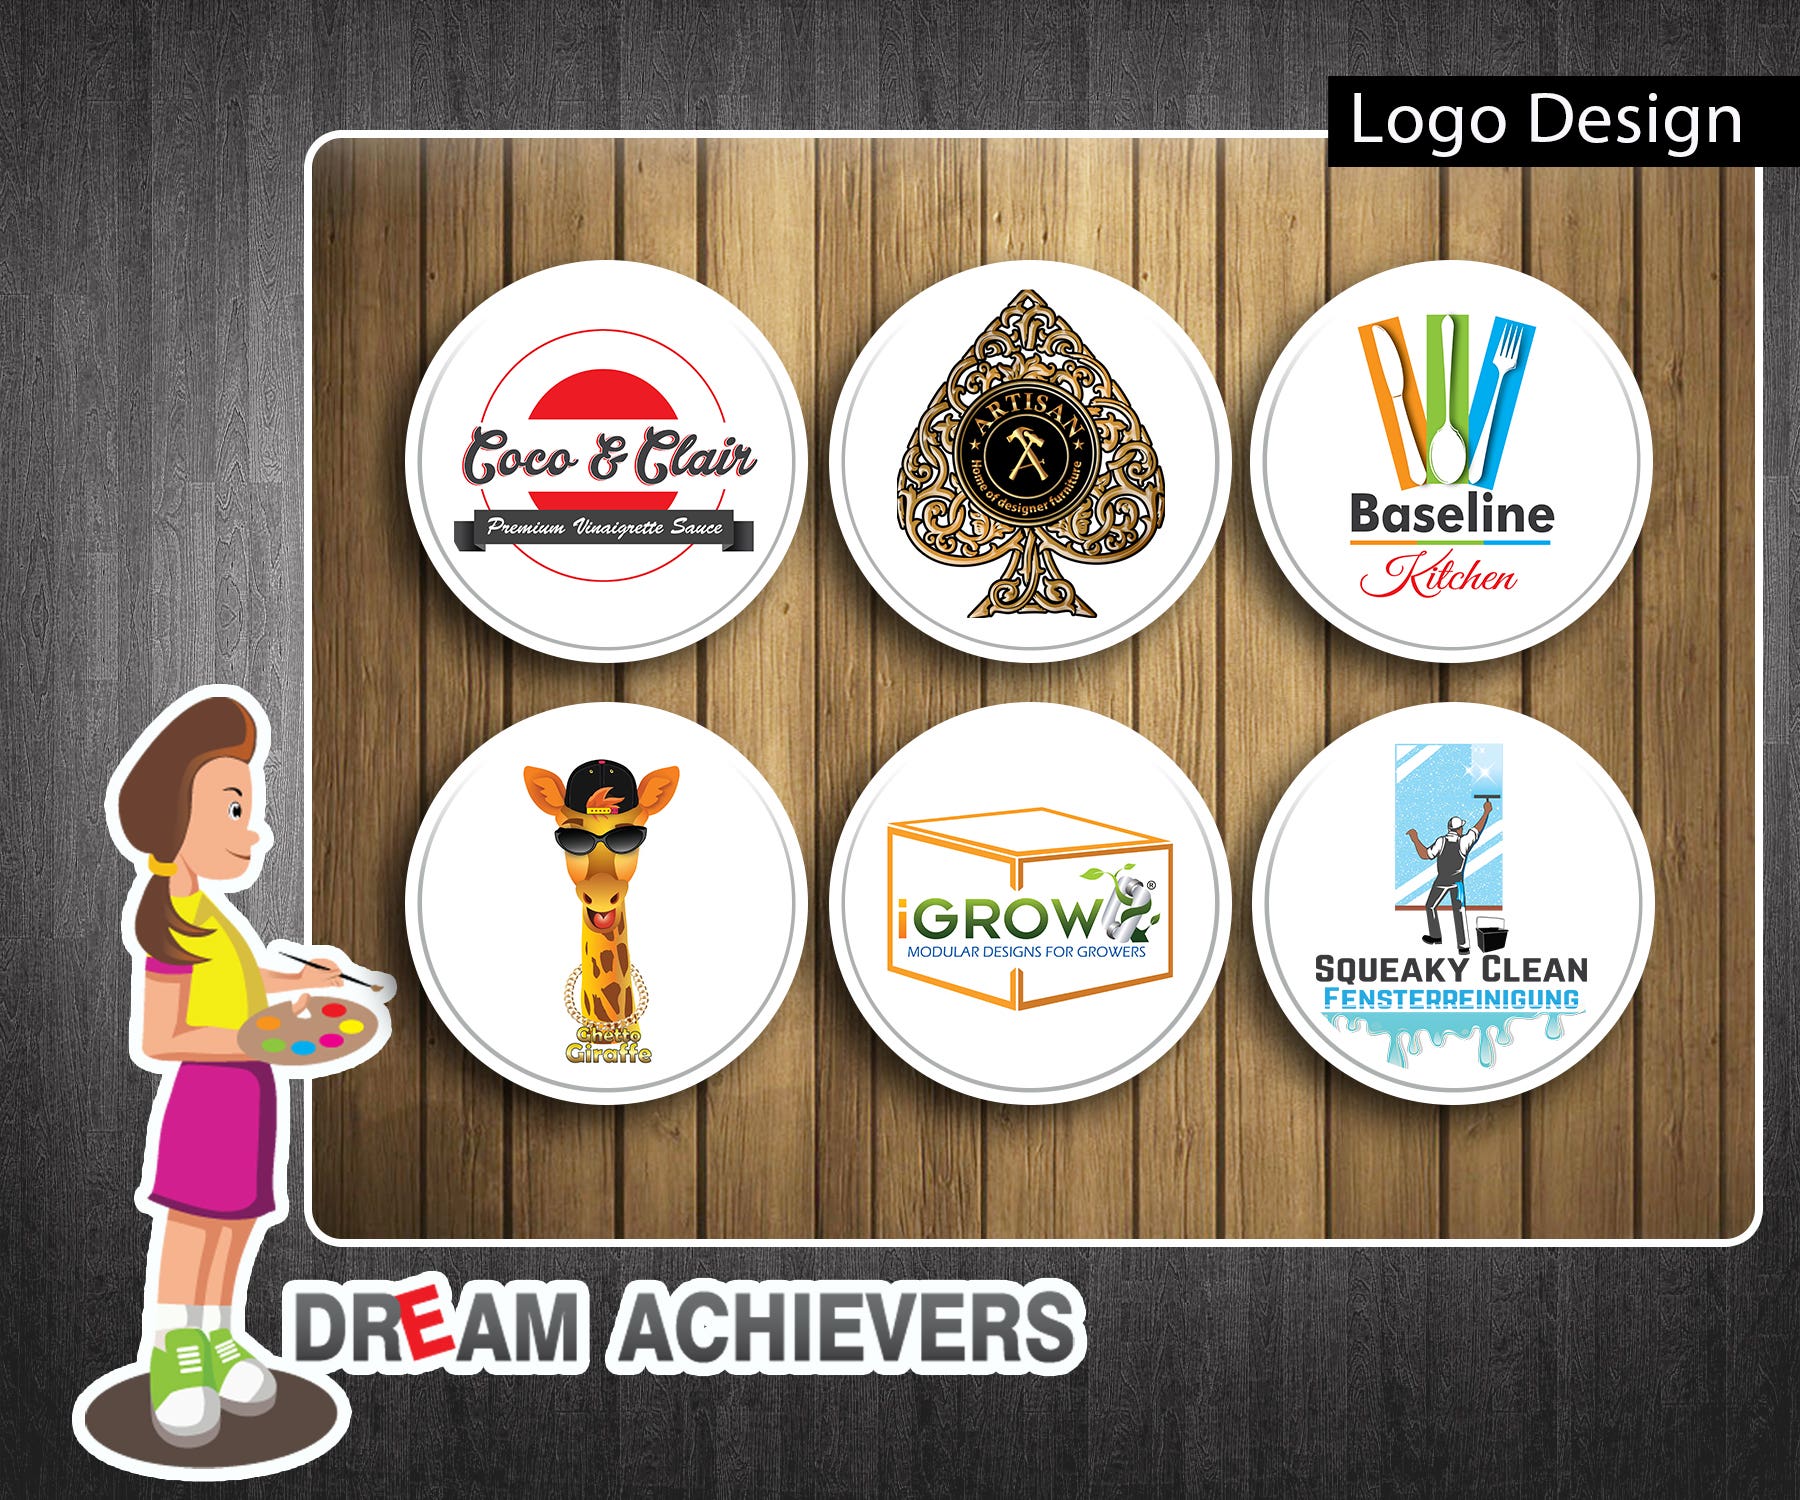 Portfolio of Logo design